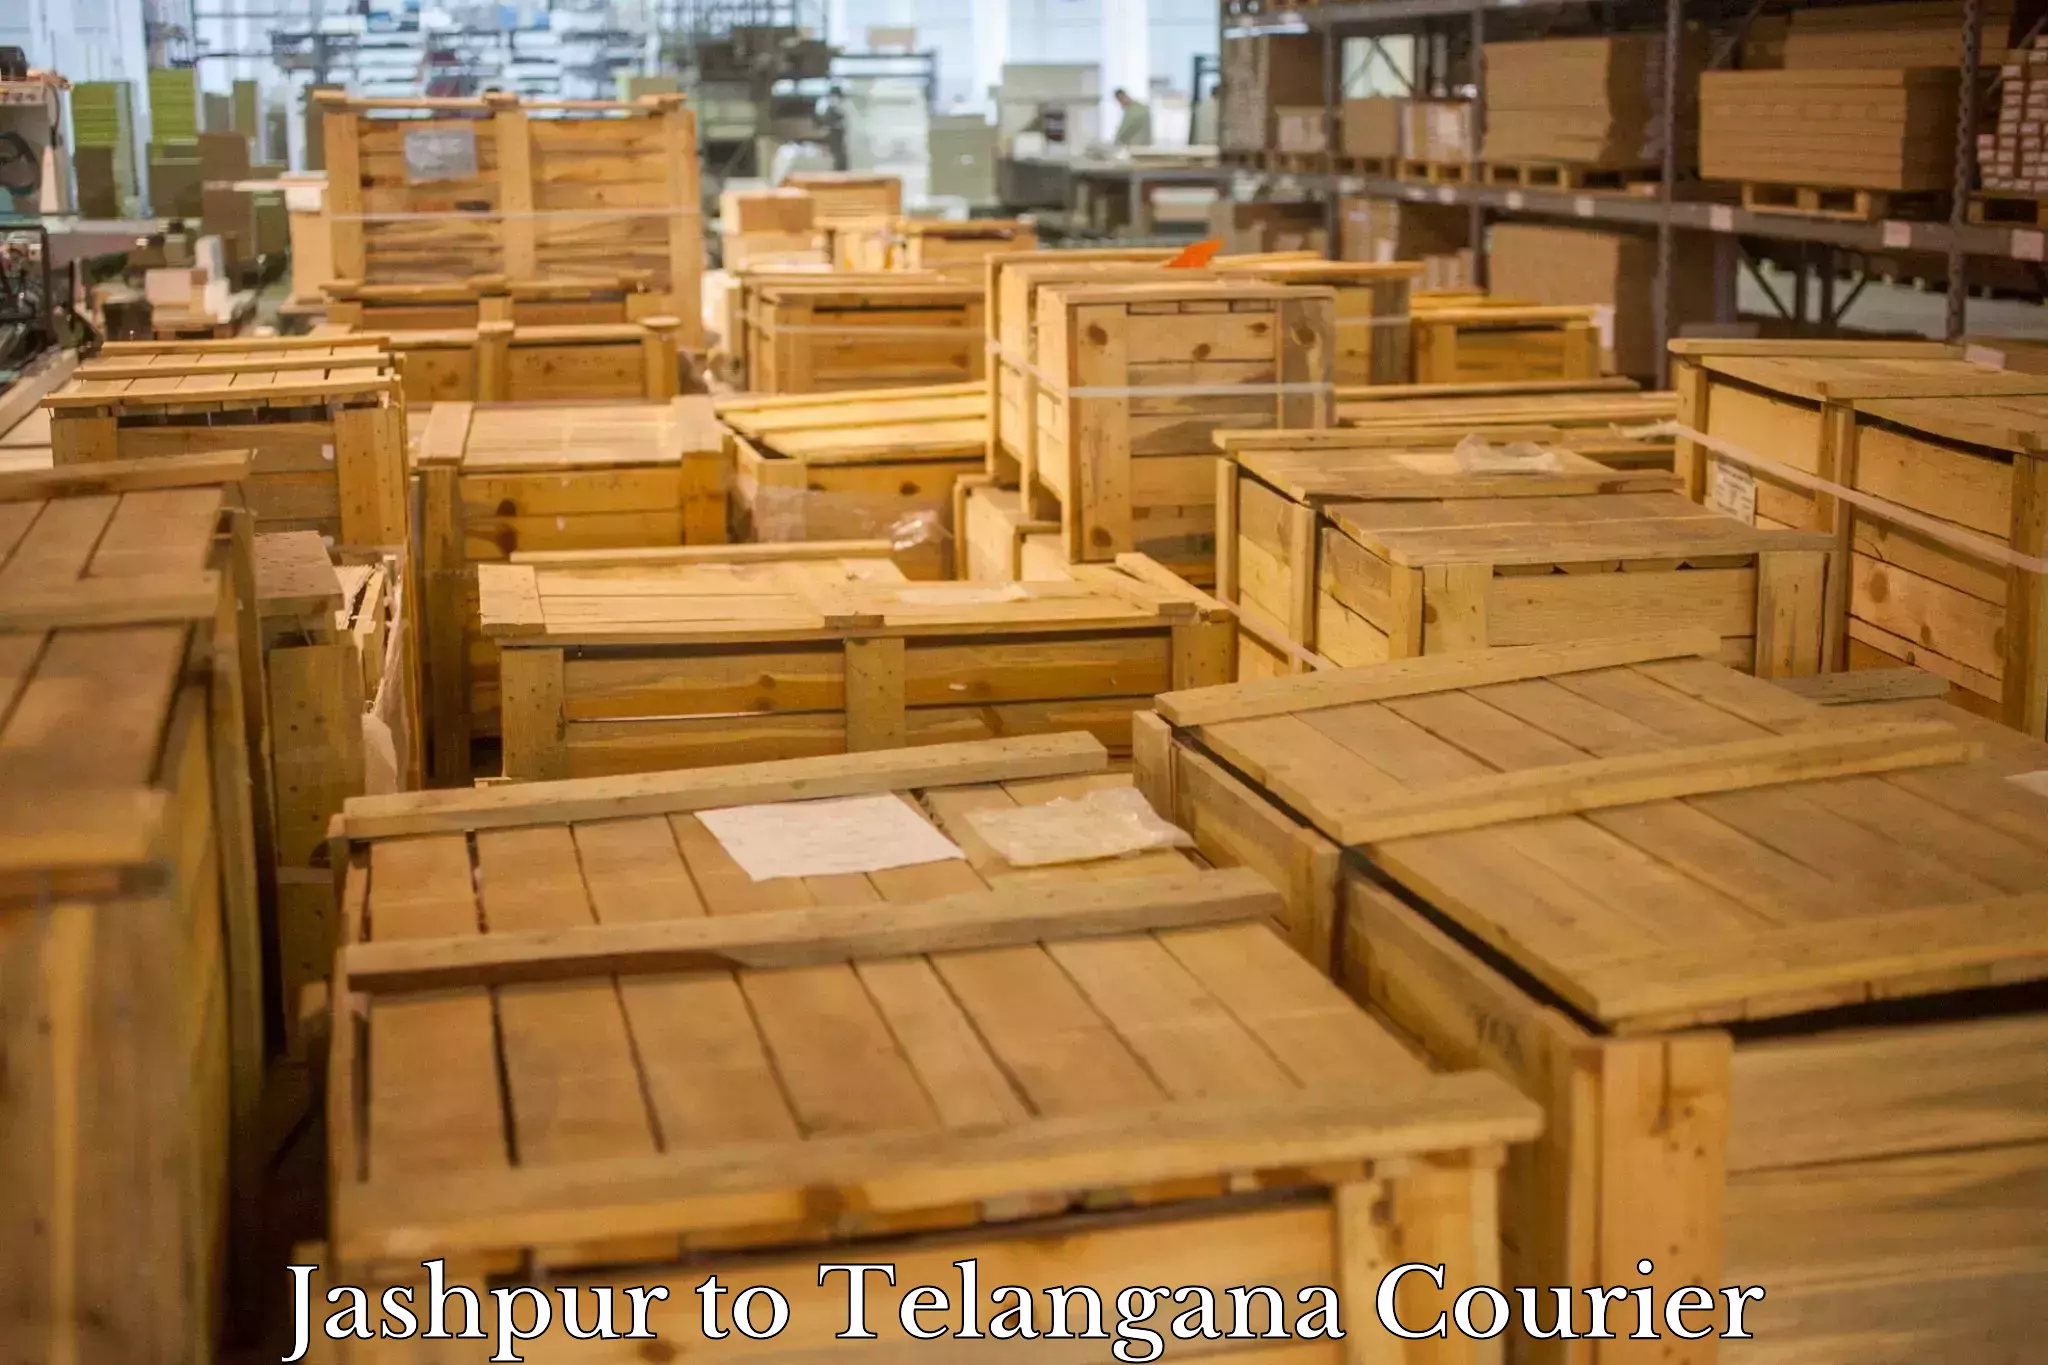 Courier service partnerships Jashpur to Jangaon